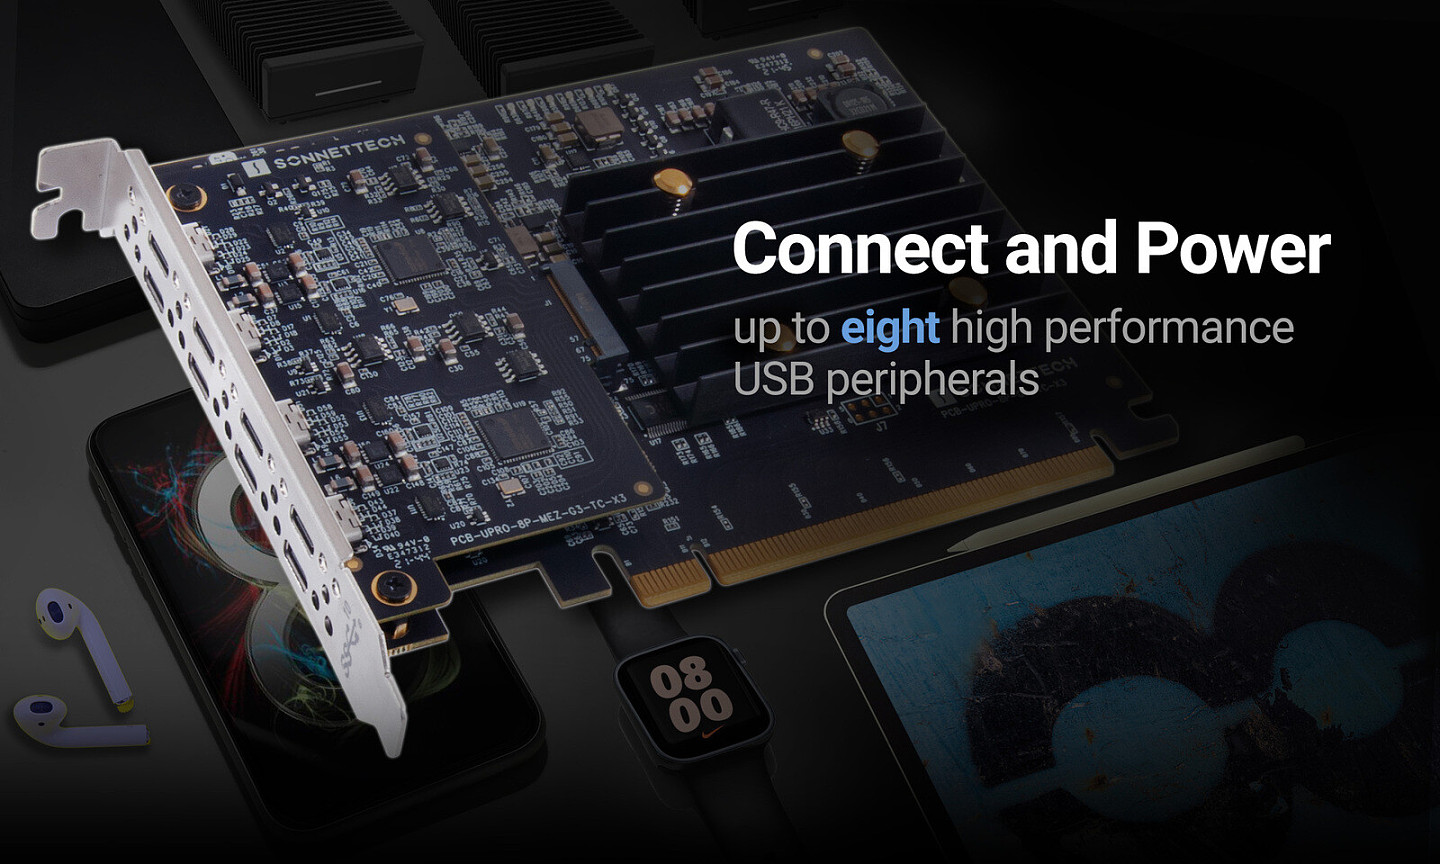 Sonnet发布8端口10Gbps USB-C PCIe 3.0适配器卡 - 1